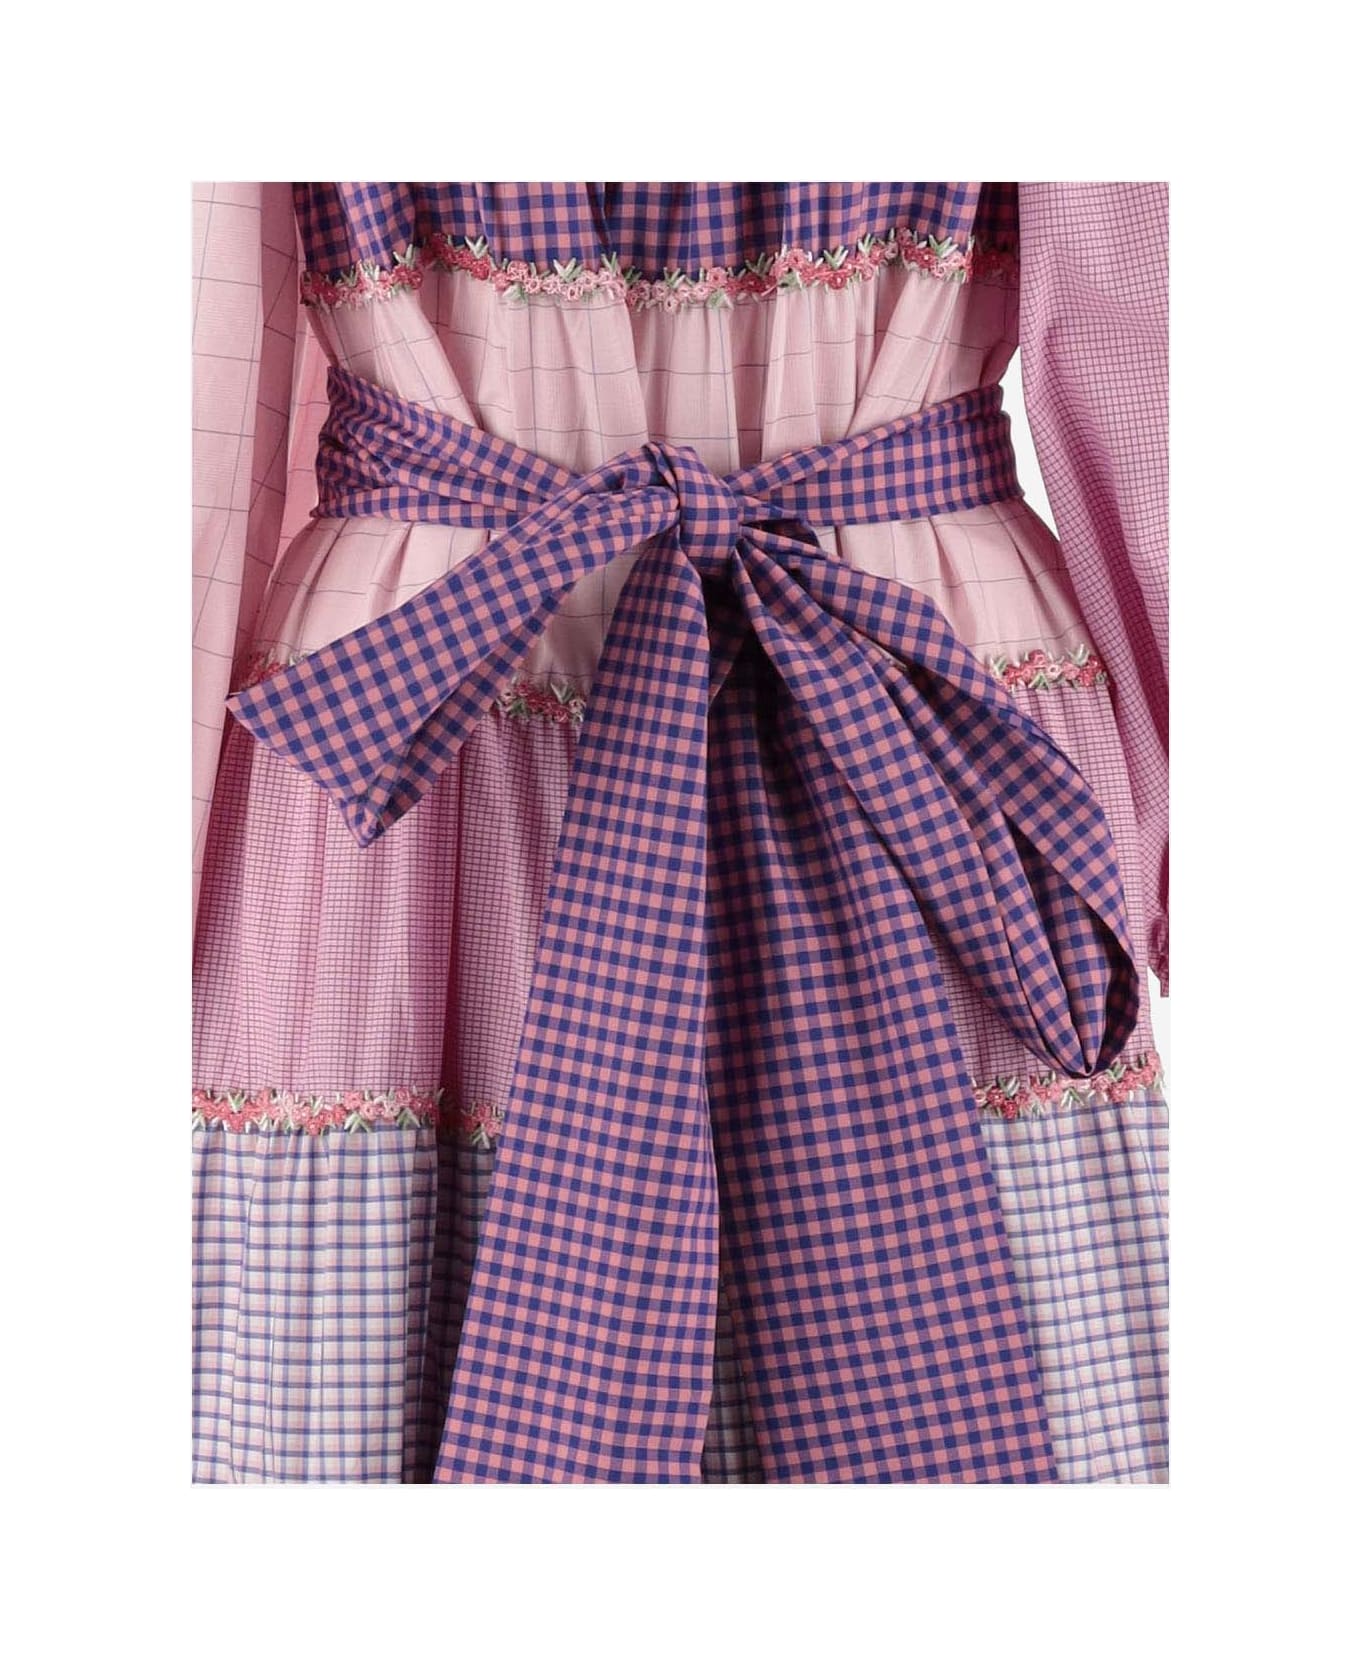 Flora Sardalos Patchwork Cotton Maxi Dress - Purple